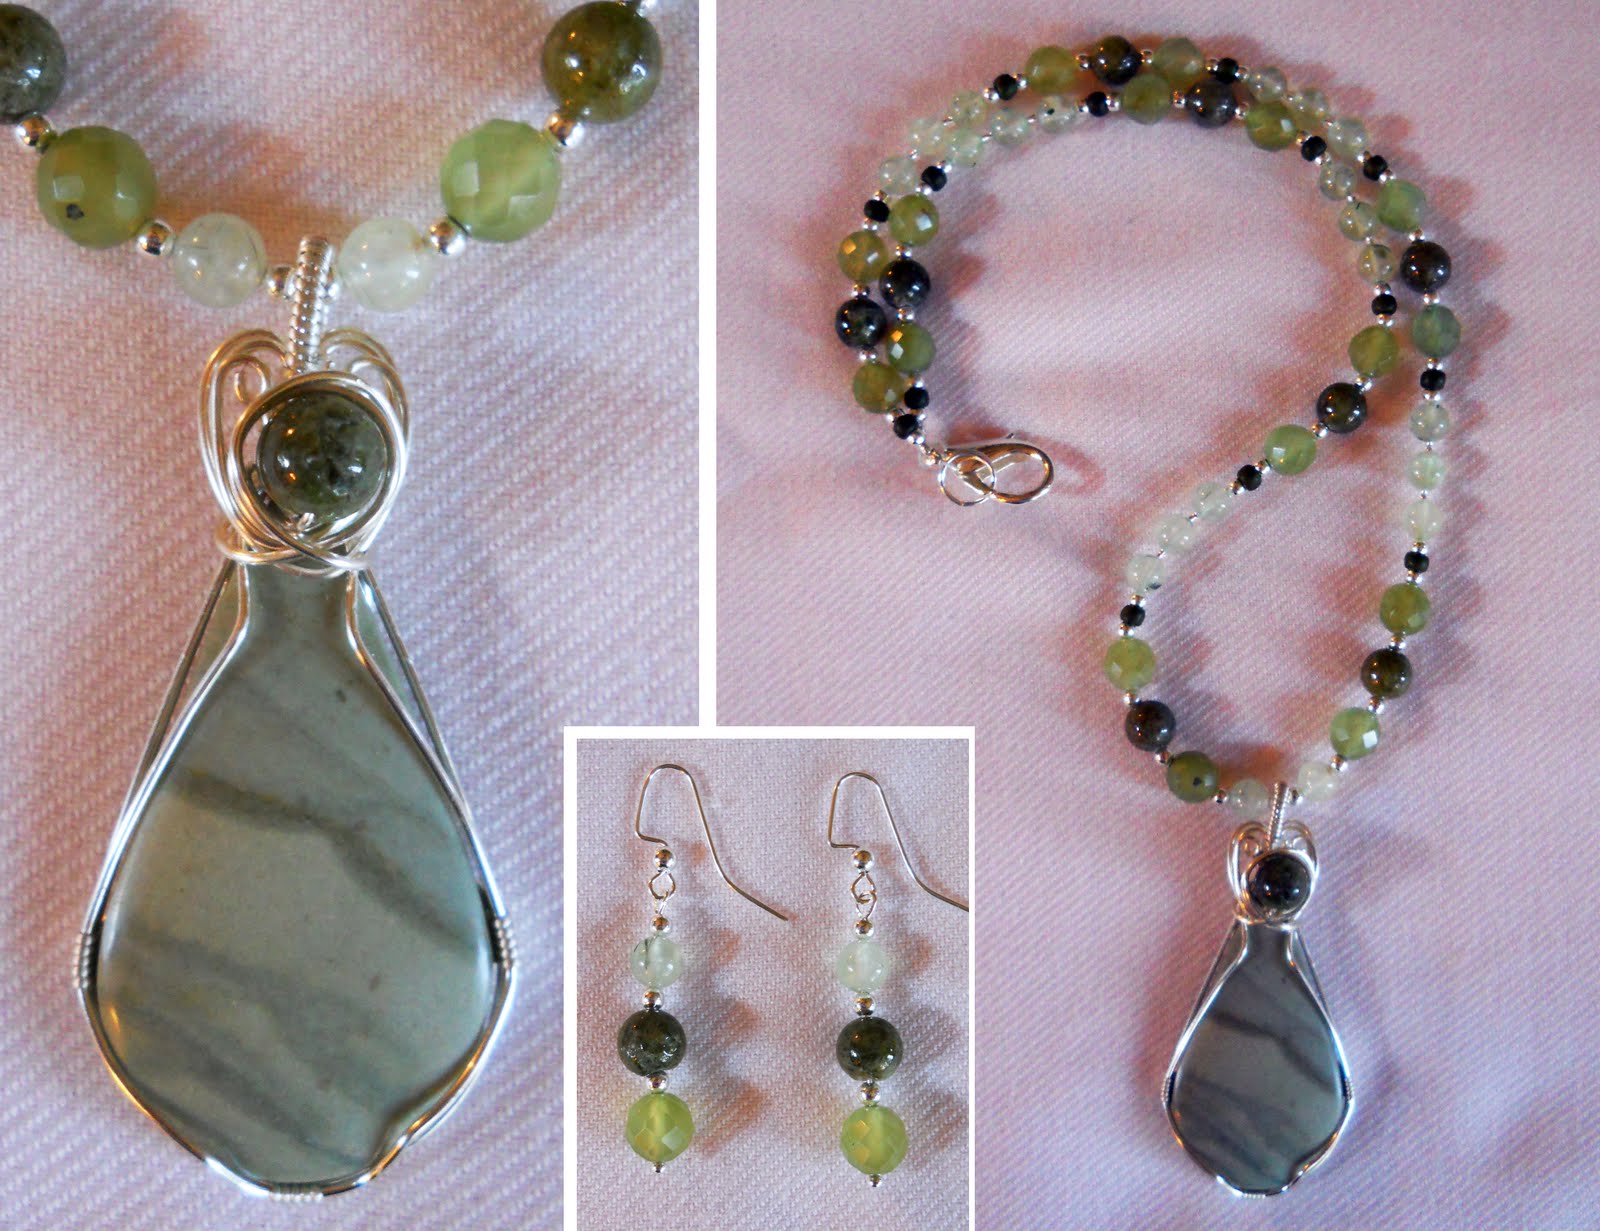 nina ulana jewelry: December 2011